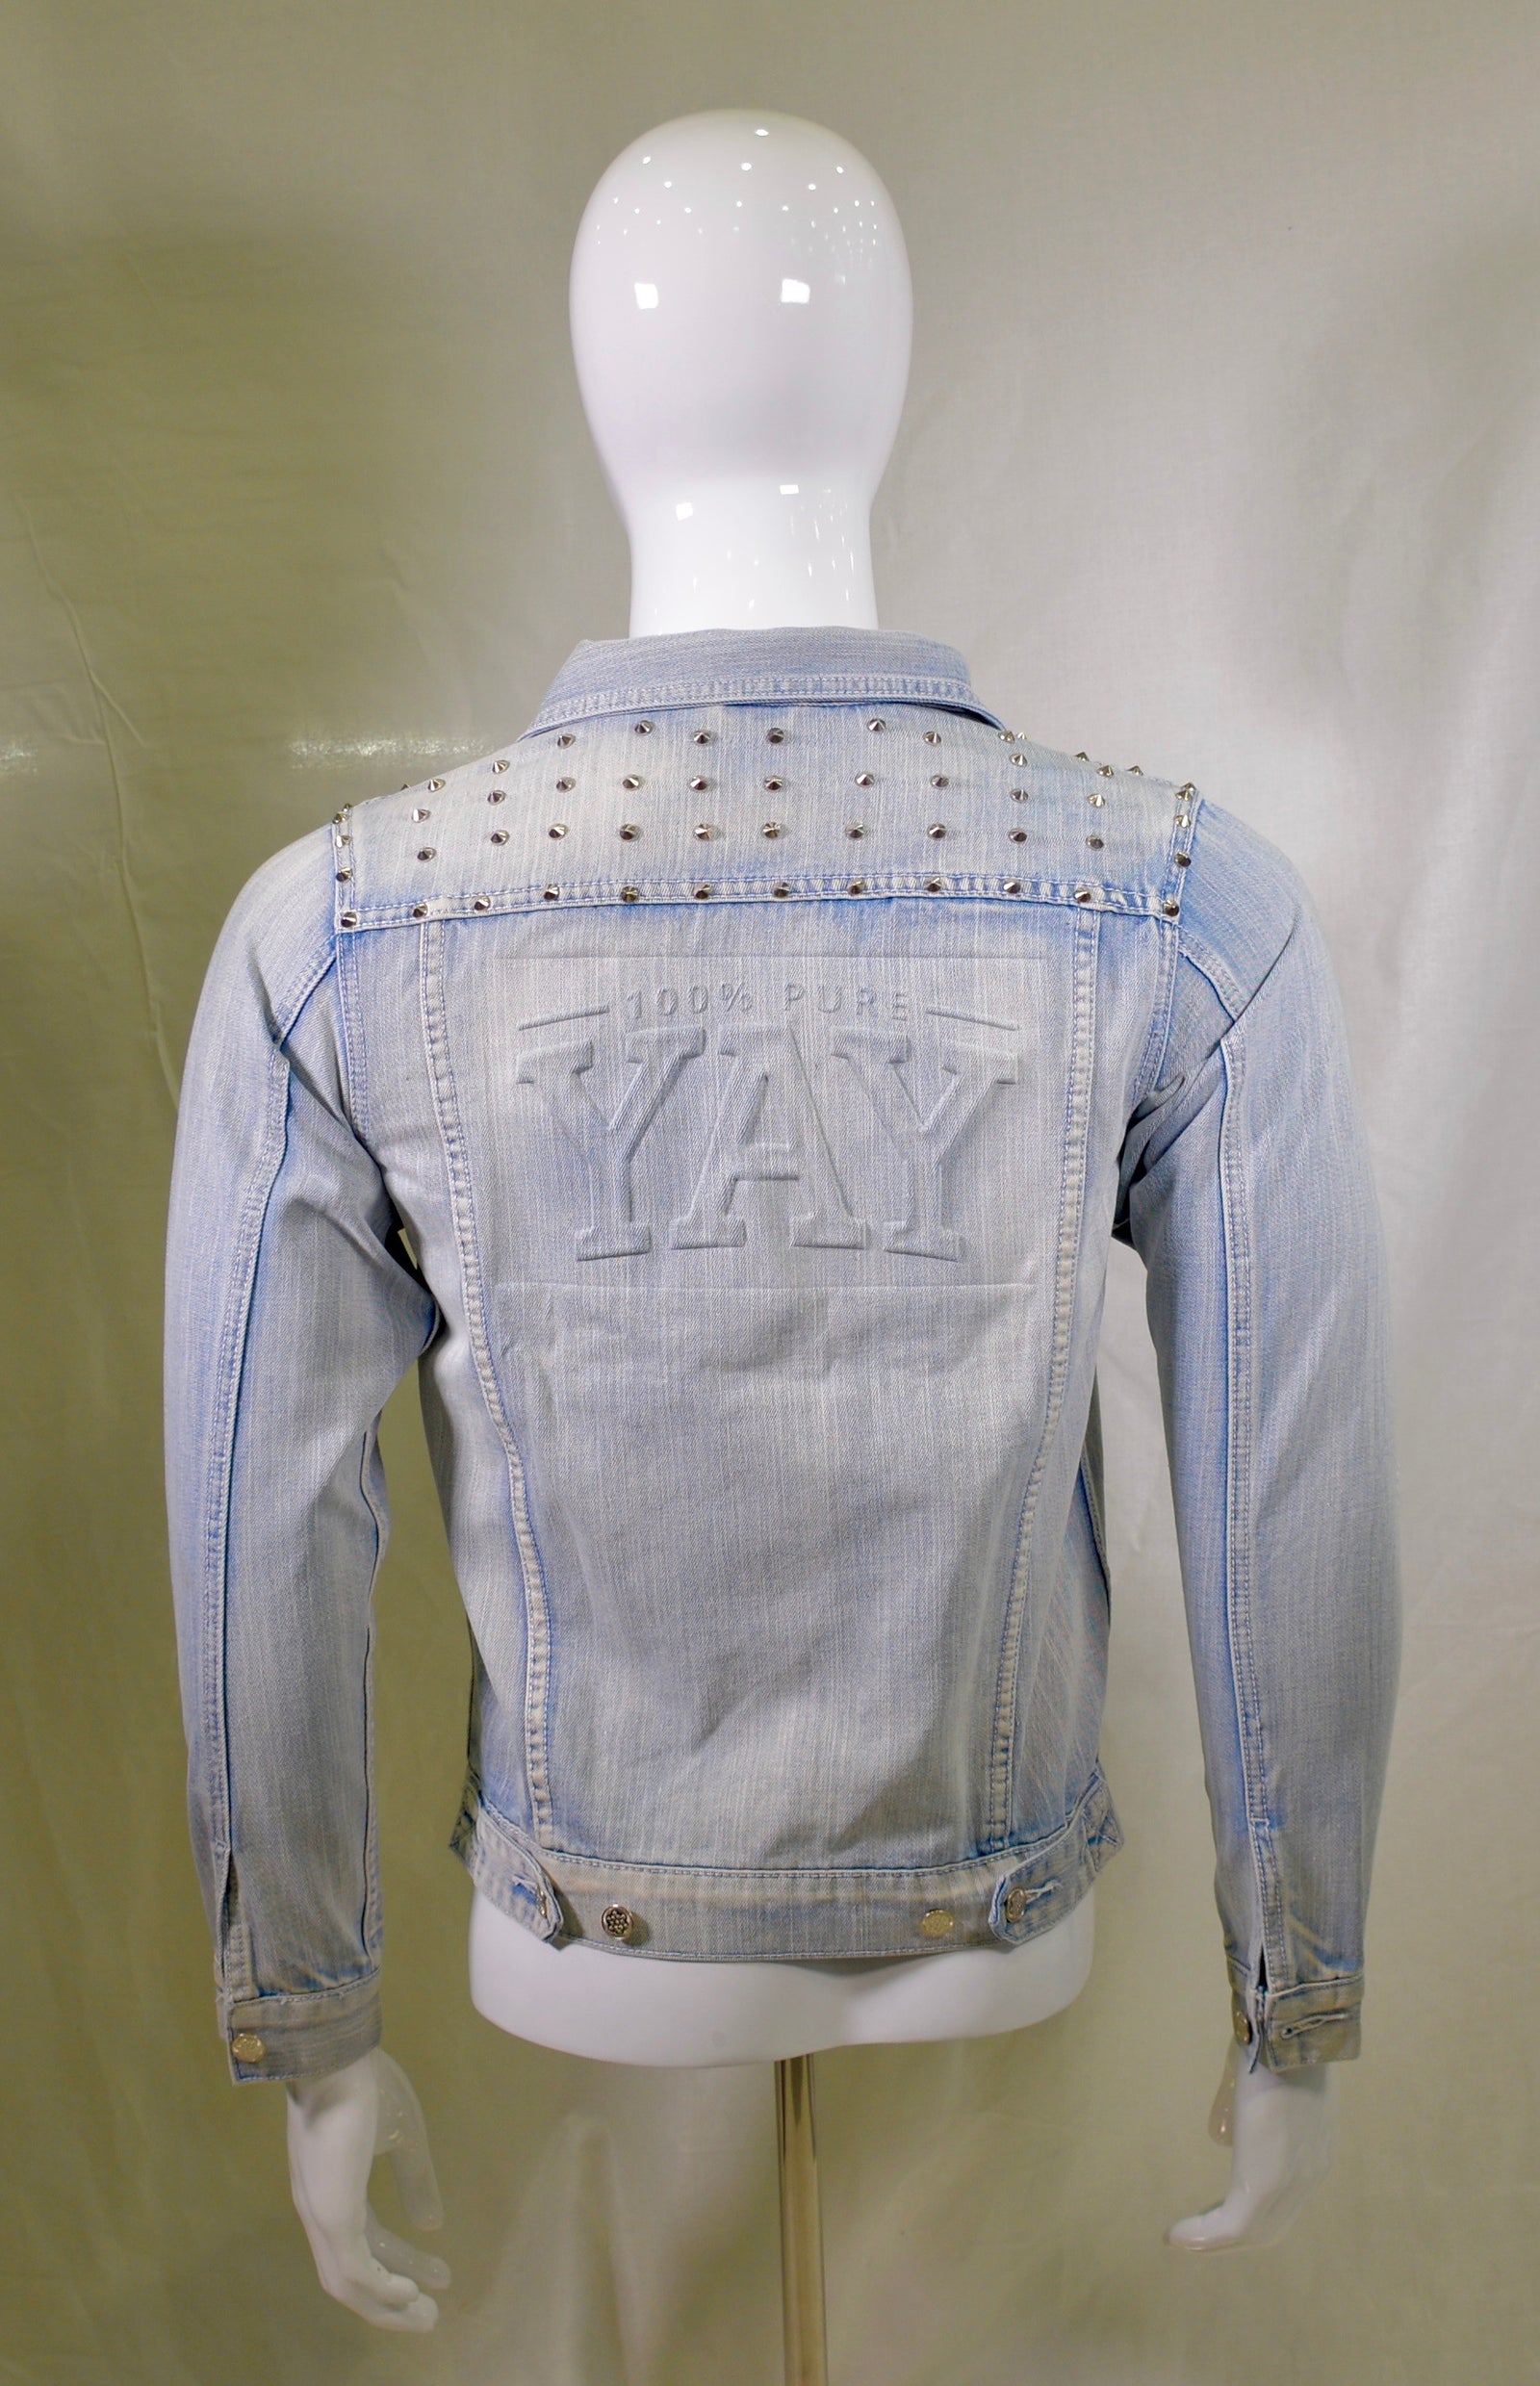 Chinx Yay Press Vintage Spiked Denim Jacket